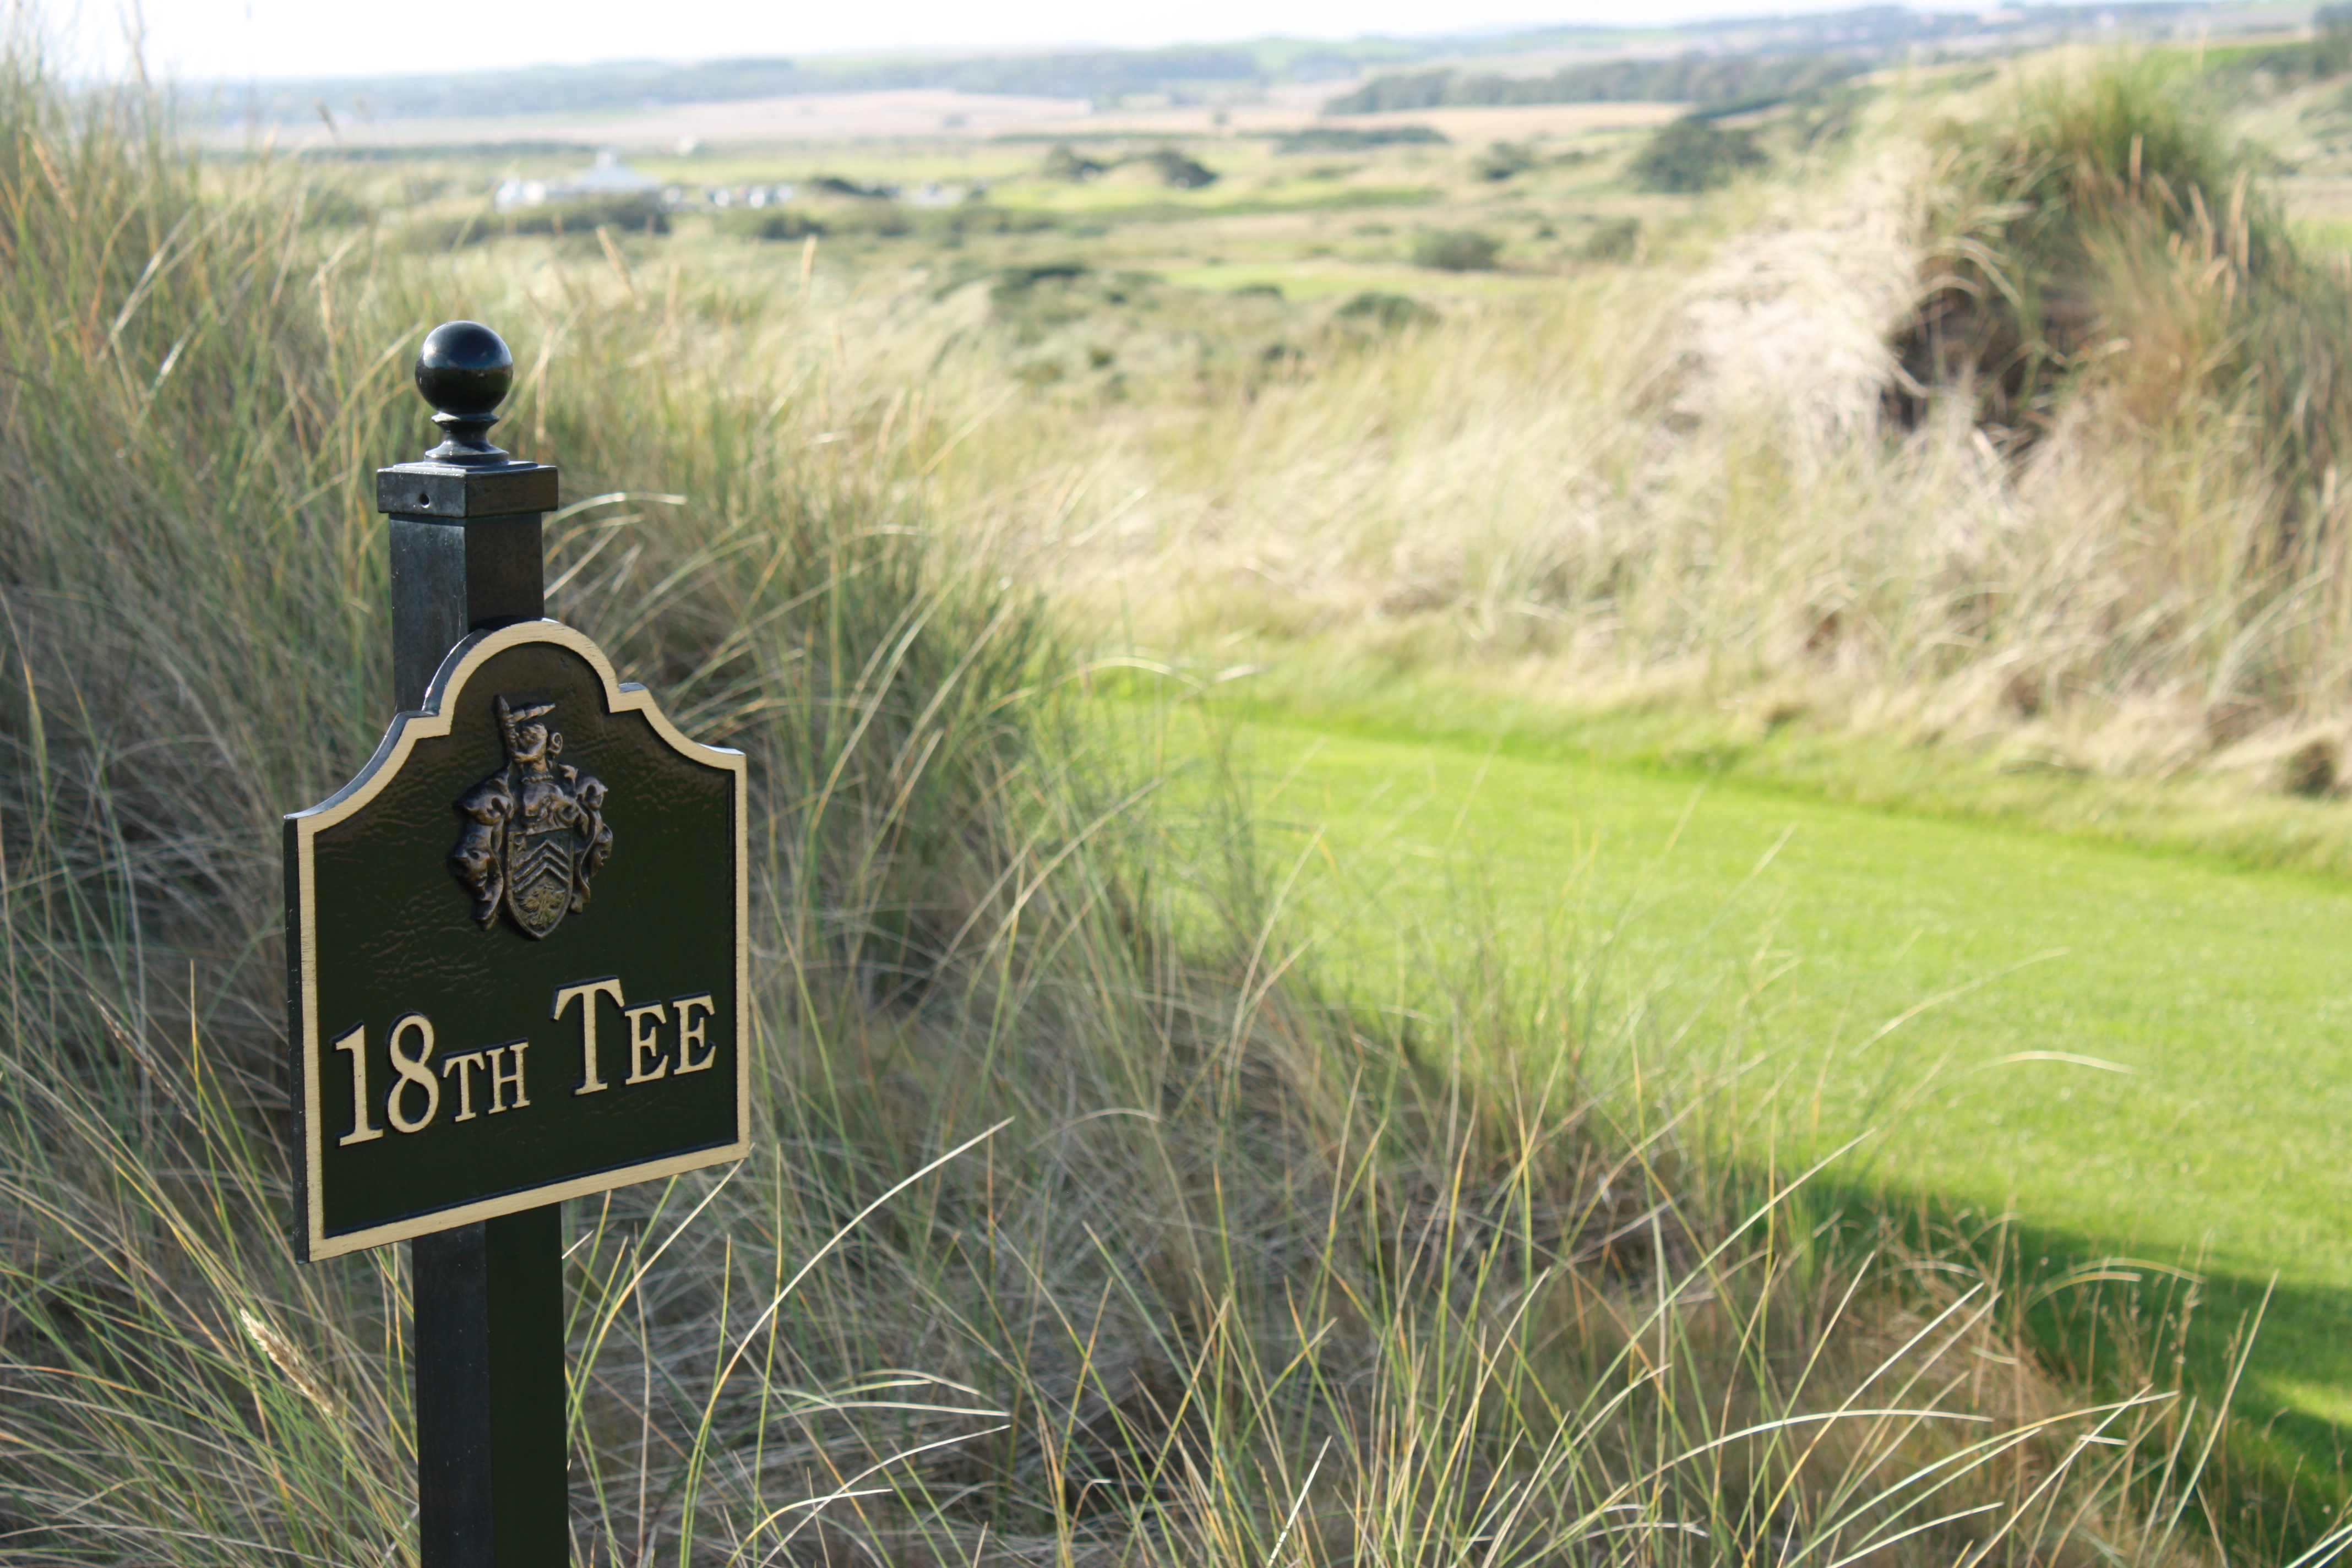 Trump International Golf Links, Scotland